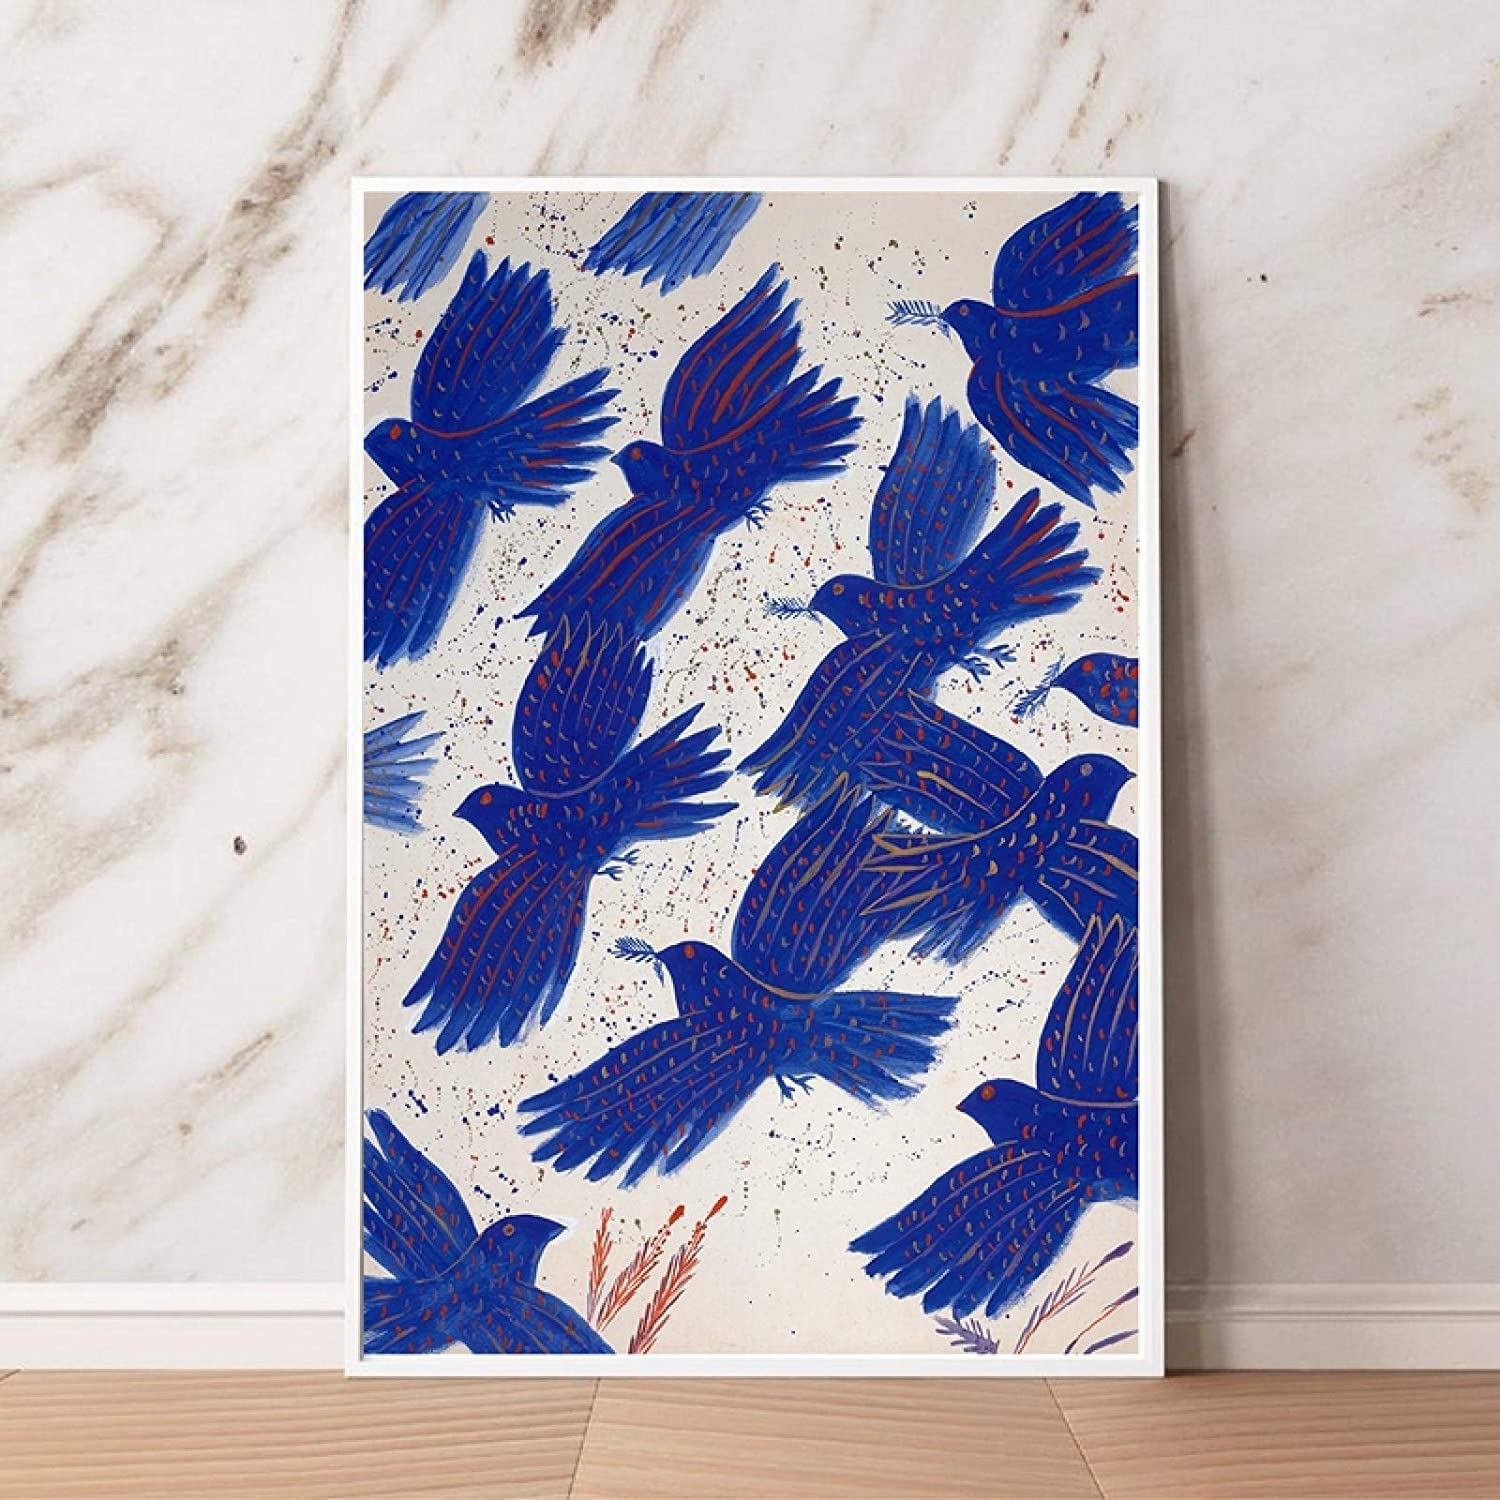 SXXRZA Bilddruck 70 x 90 cm Rahmenlos Alecos Fassianos Poster Wandkunst Leinwanddruck Blauer Paradiesvogel Kunstmalerei Wandbild Raumdekoration